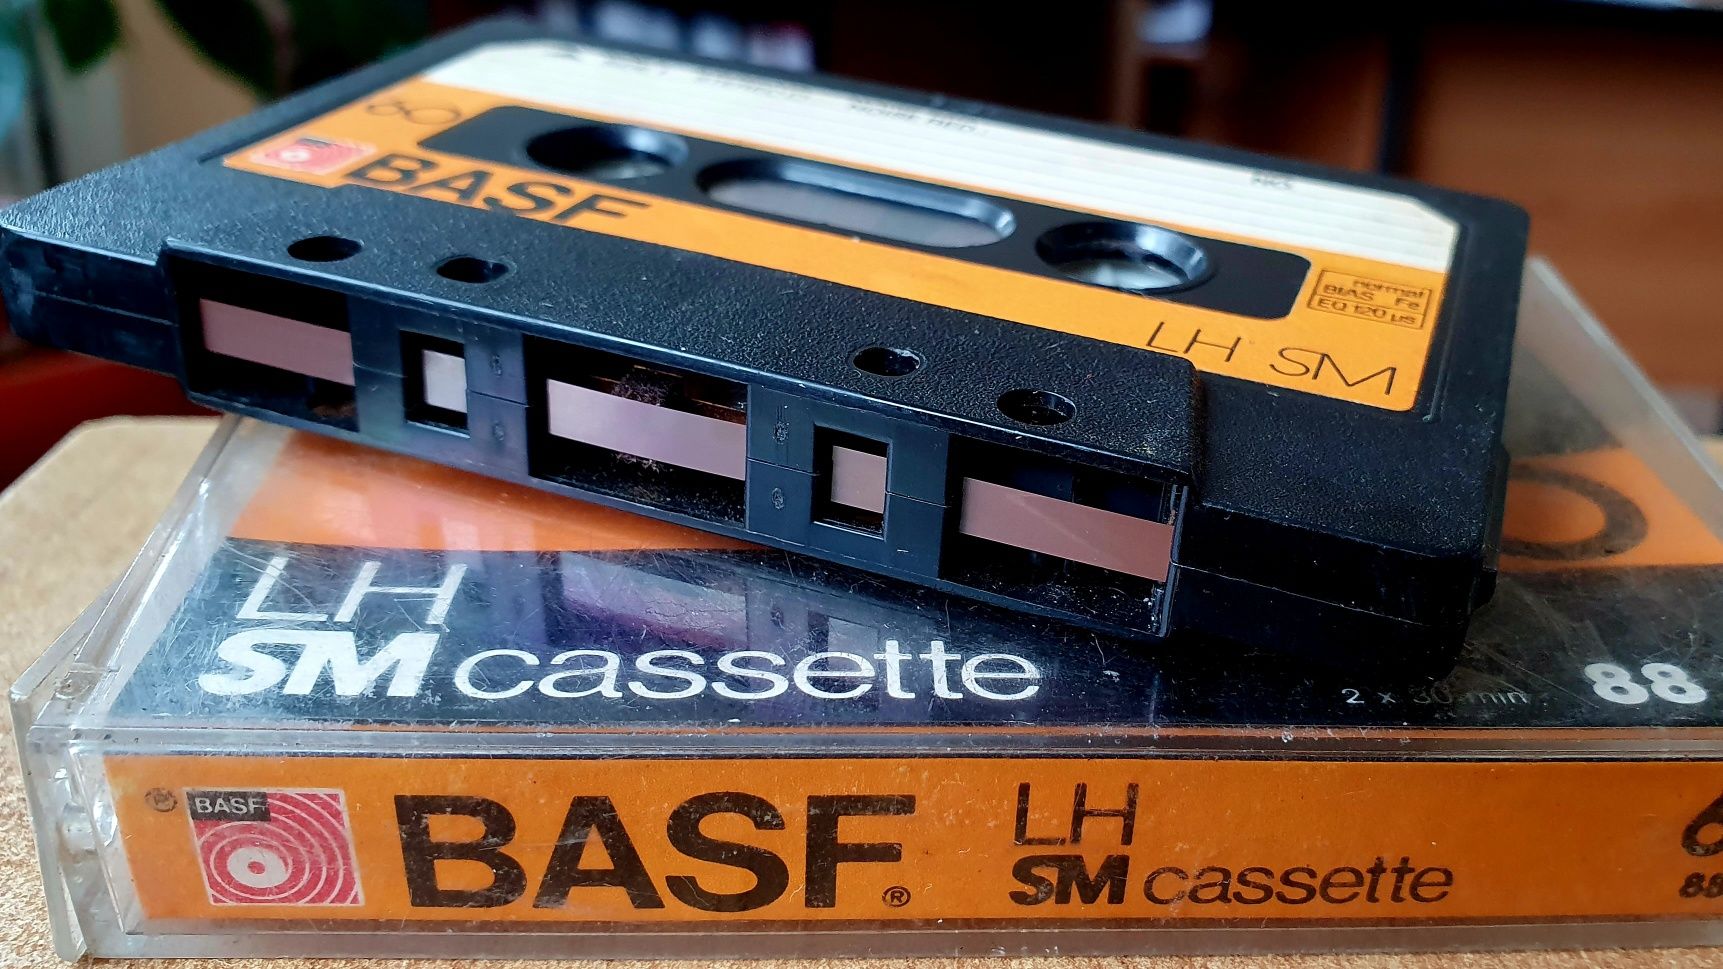 Caseta BASF 60, LH/SM cassette, 88m